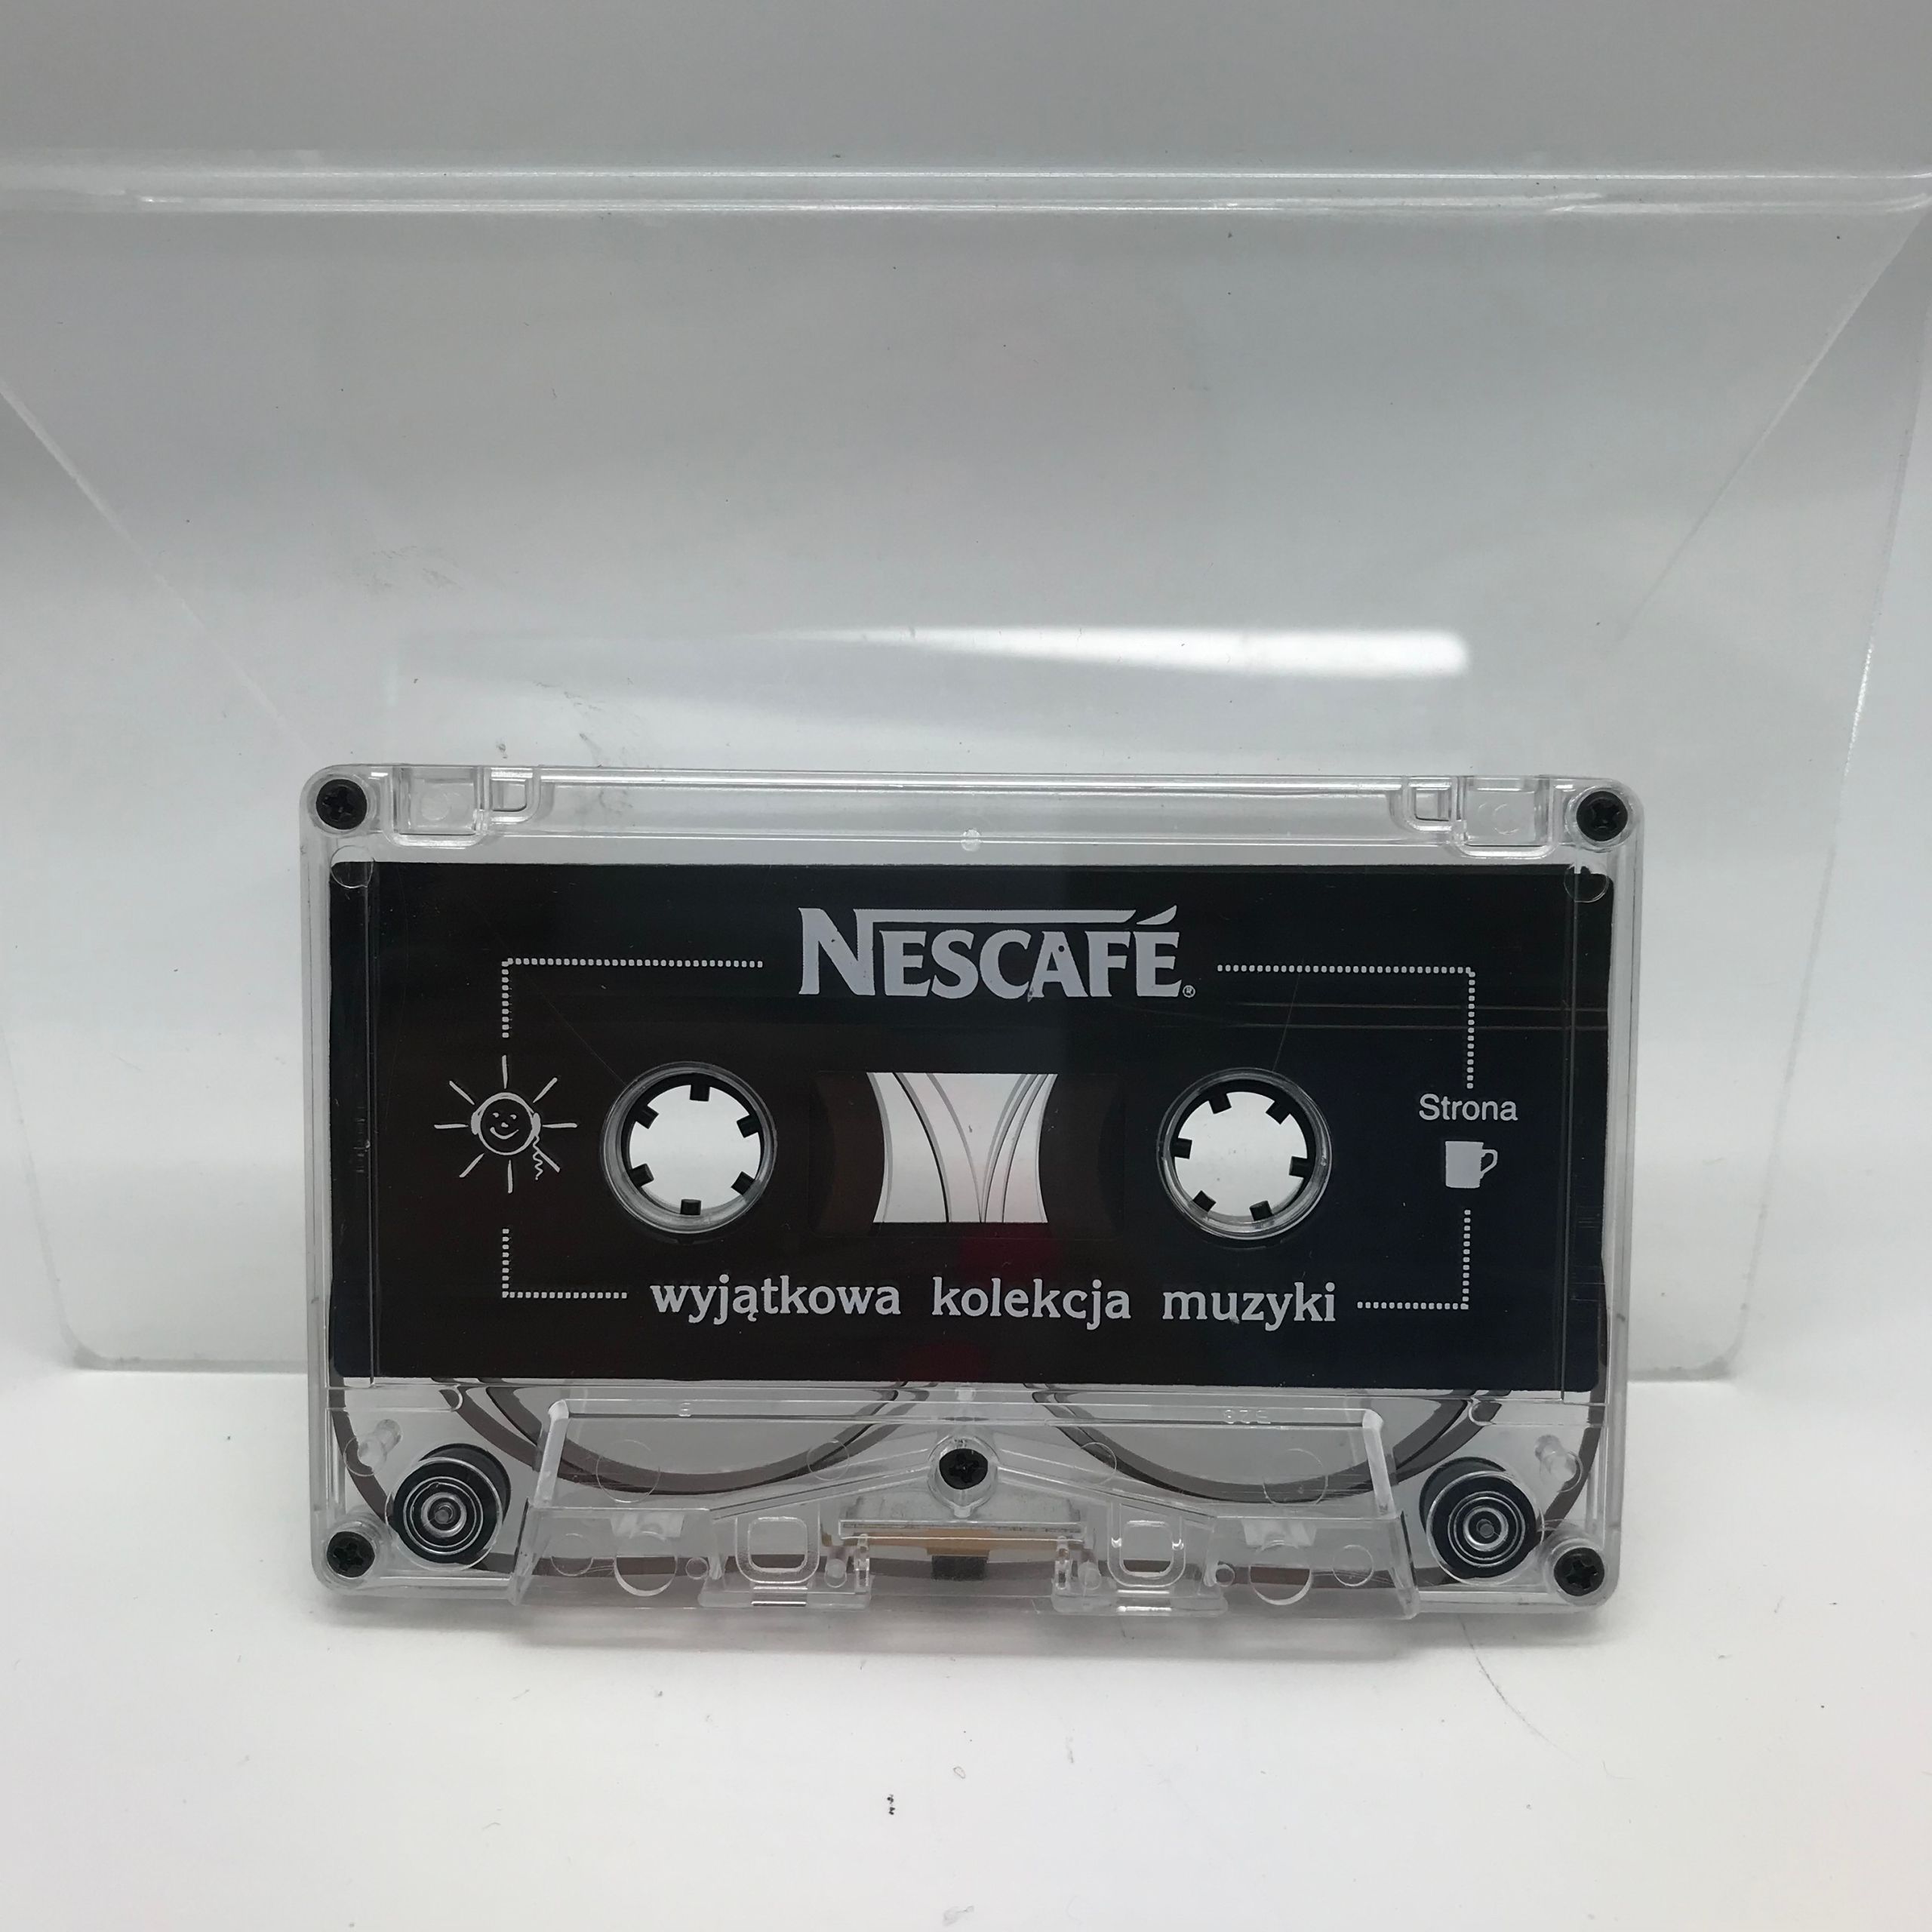 Kaseta - Nescafe - Open Up